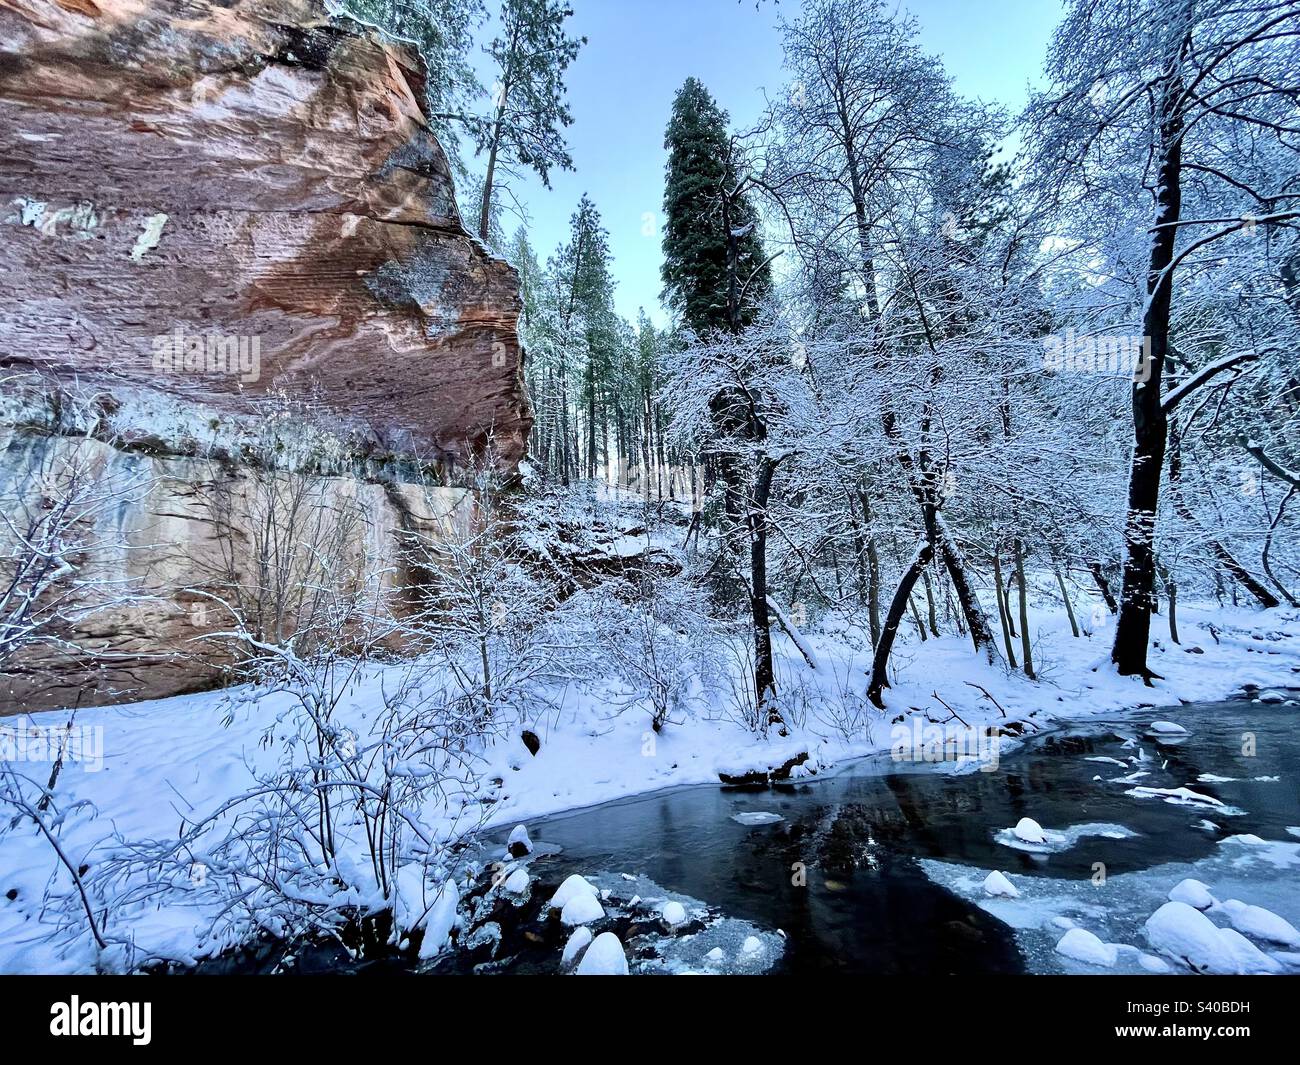 Winter Wunderland, Sedona Arizona, West Fork, Oak Creek Canyon, Frosted Tree Branches, Rote Felsen, grüne Kiefern, blauer Himmel, schneebedeckte Felsen in eiskaltem Bach Stockfoto